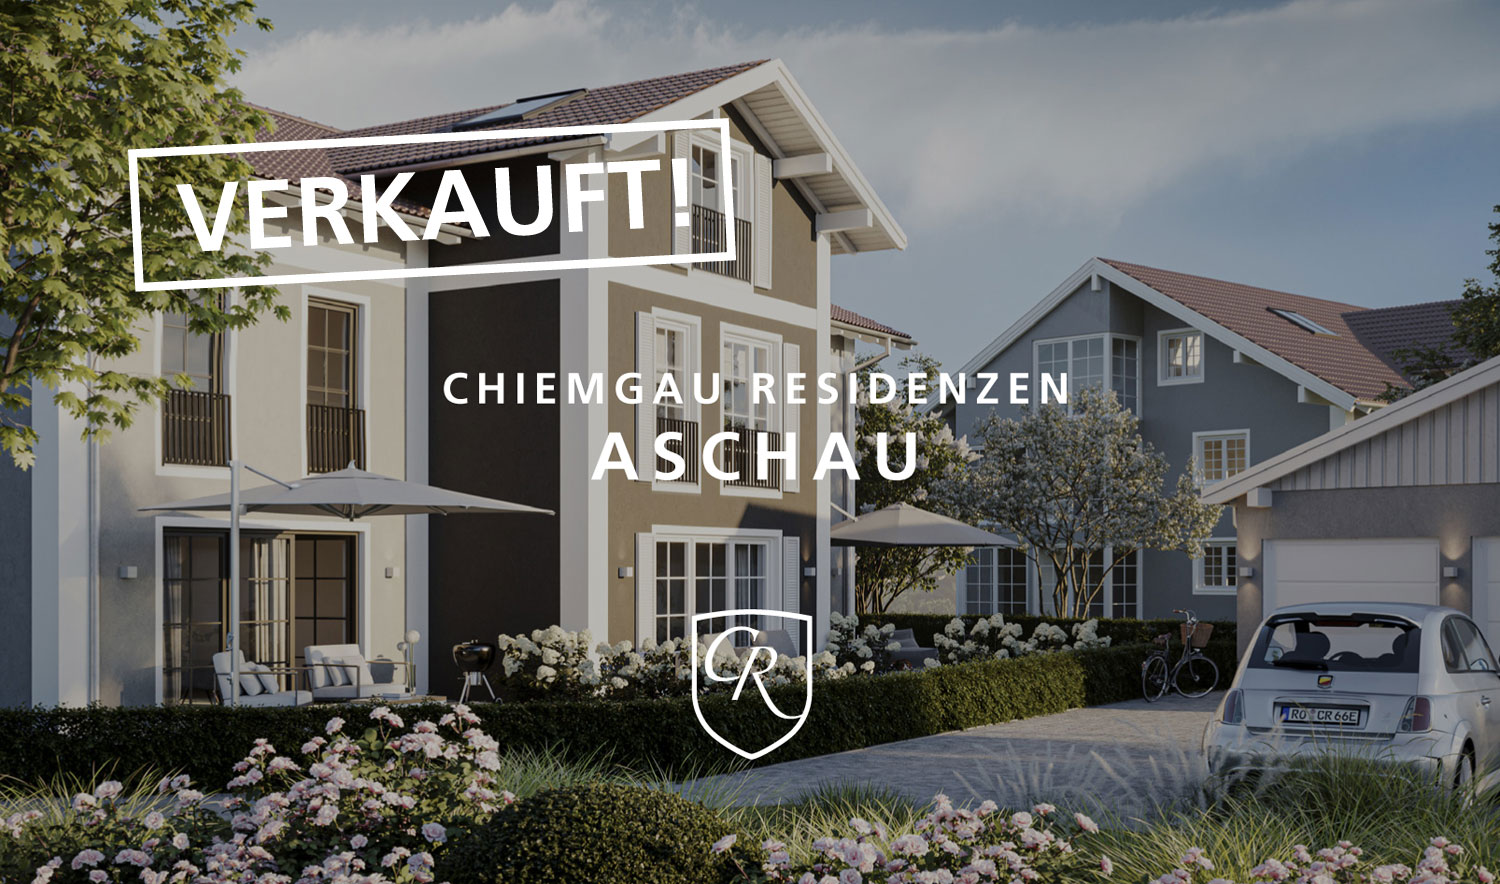 Chiemgau Residenzen Aschau